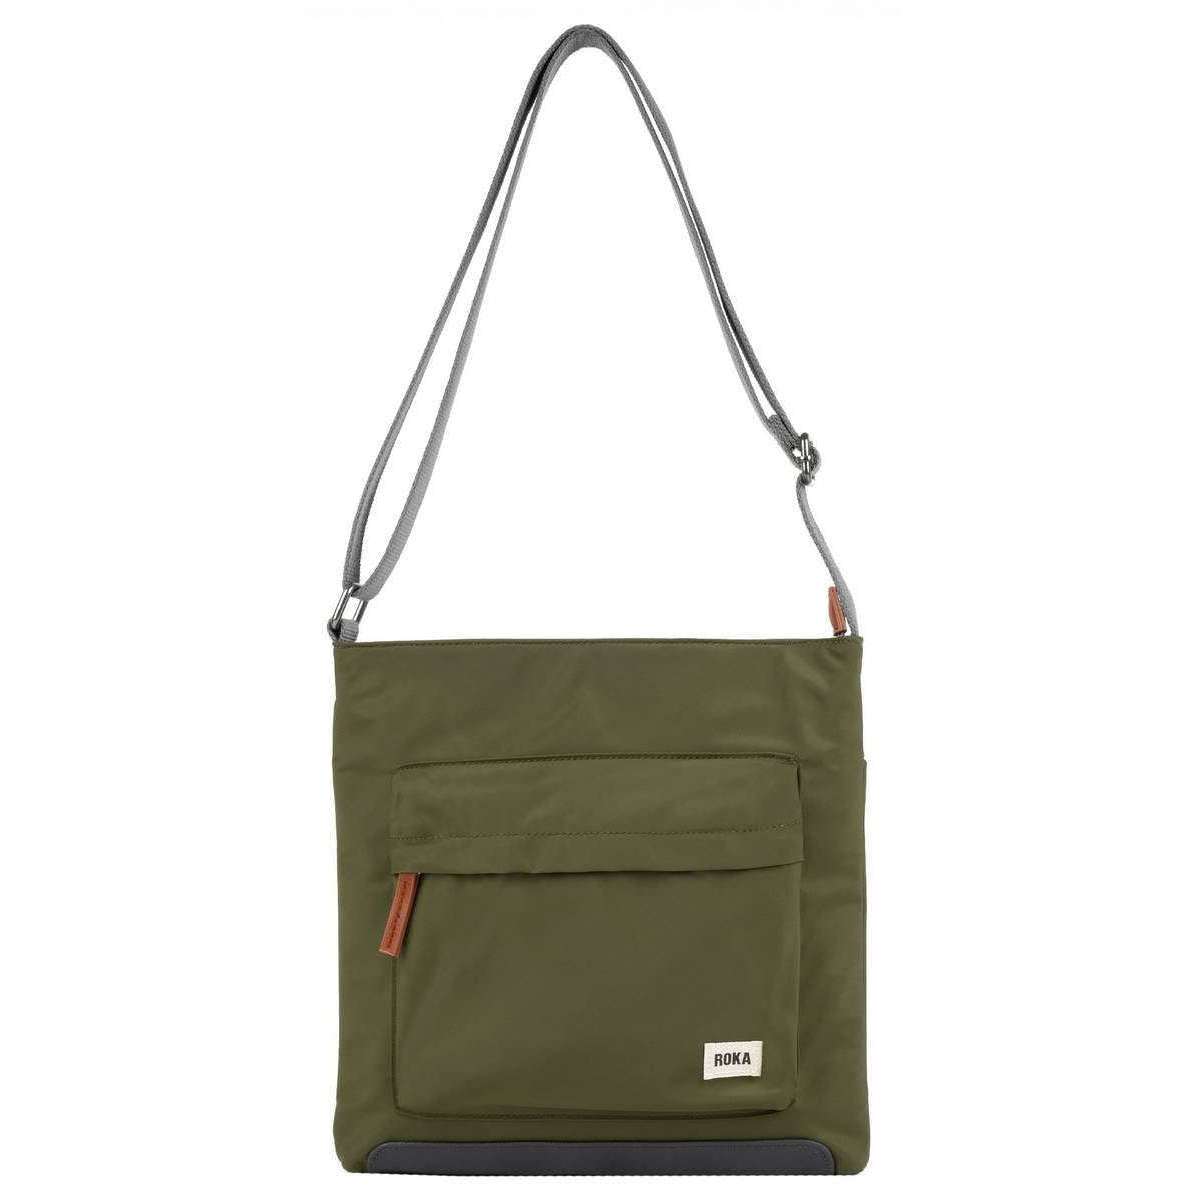 Roka Kennington B Medium Sustainable Nylon Cross Body Bag - Military Green